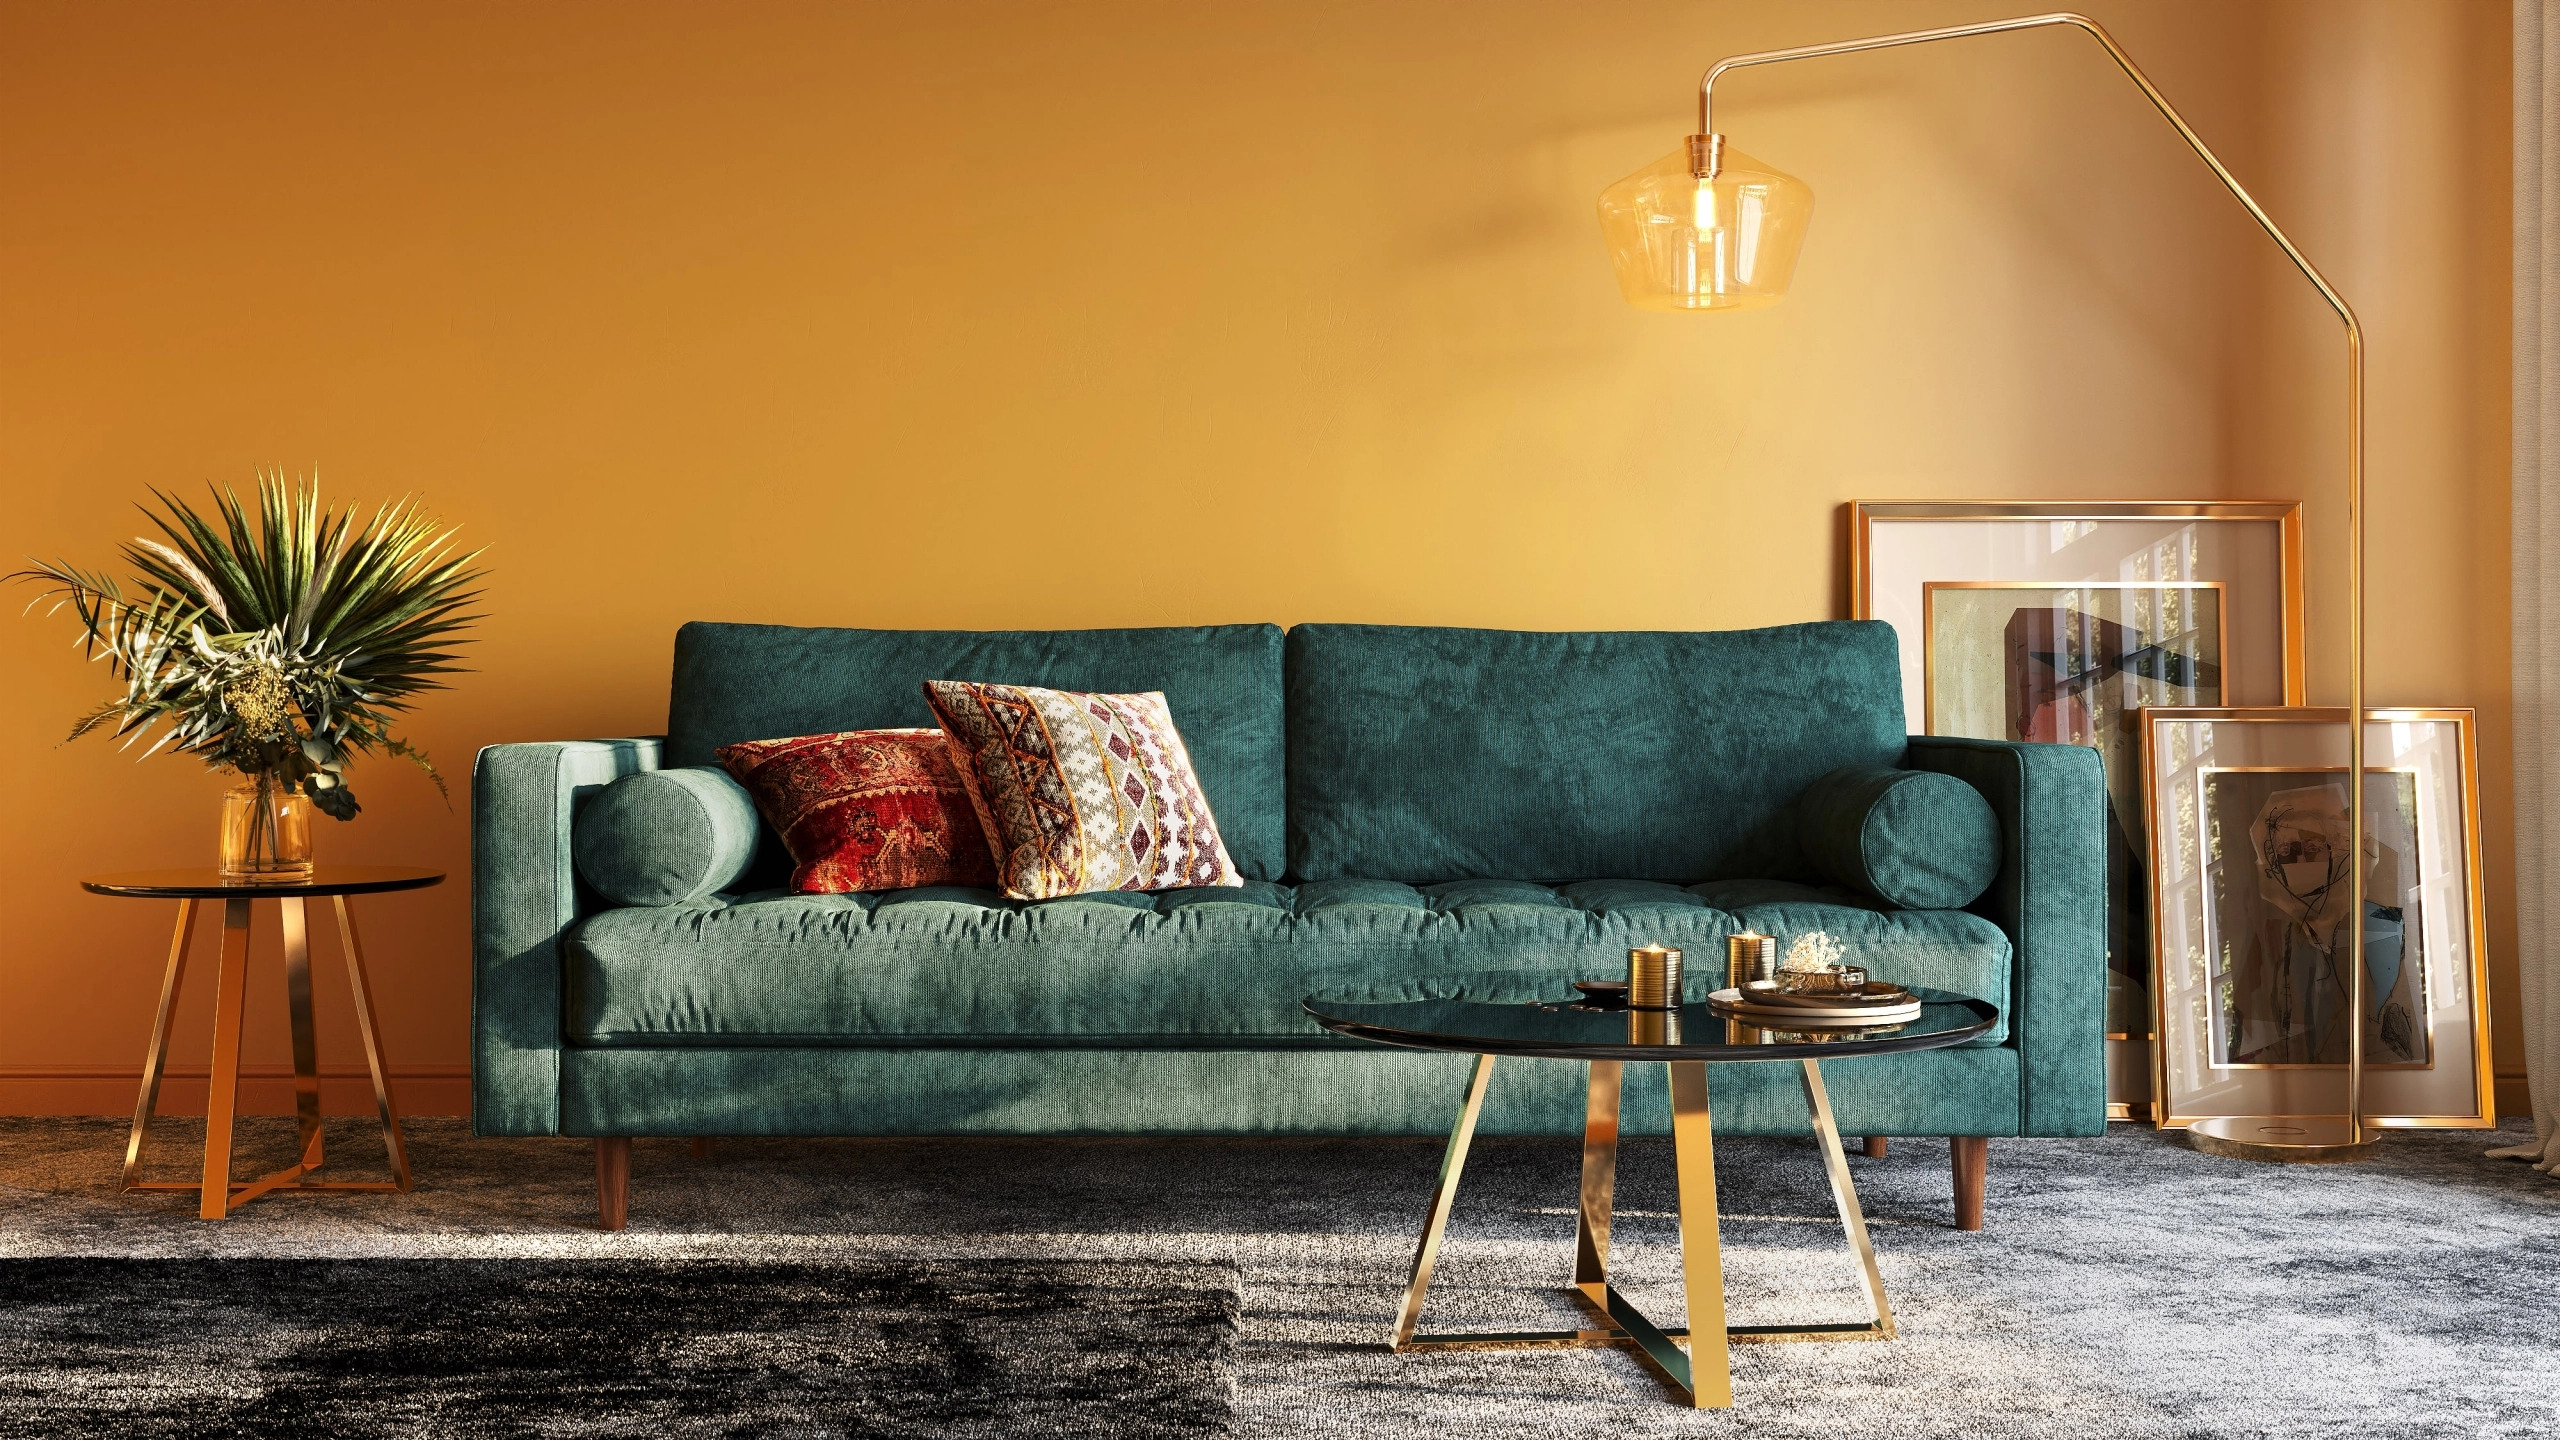 Photorealistic CG Lifestyle for a Sofa